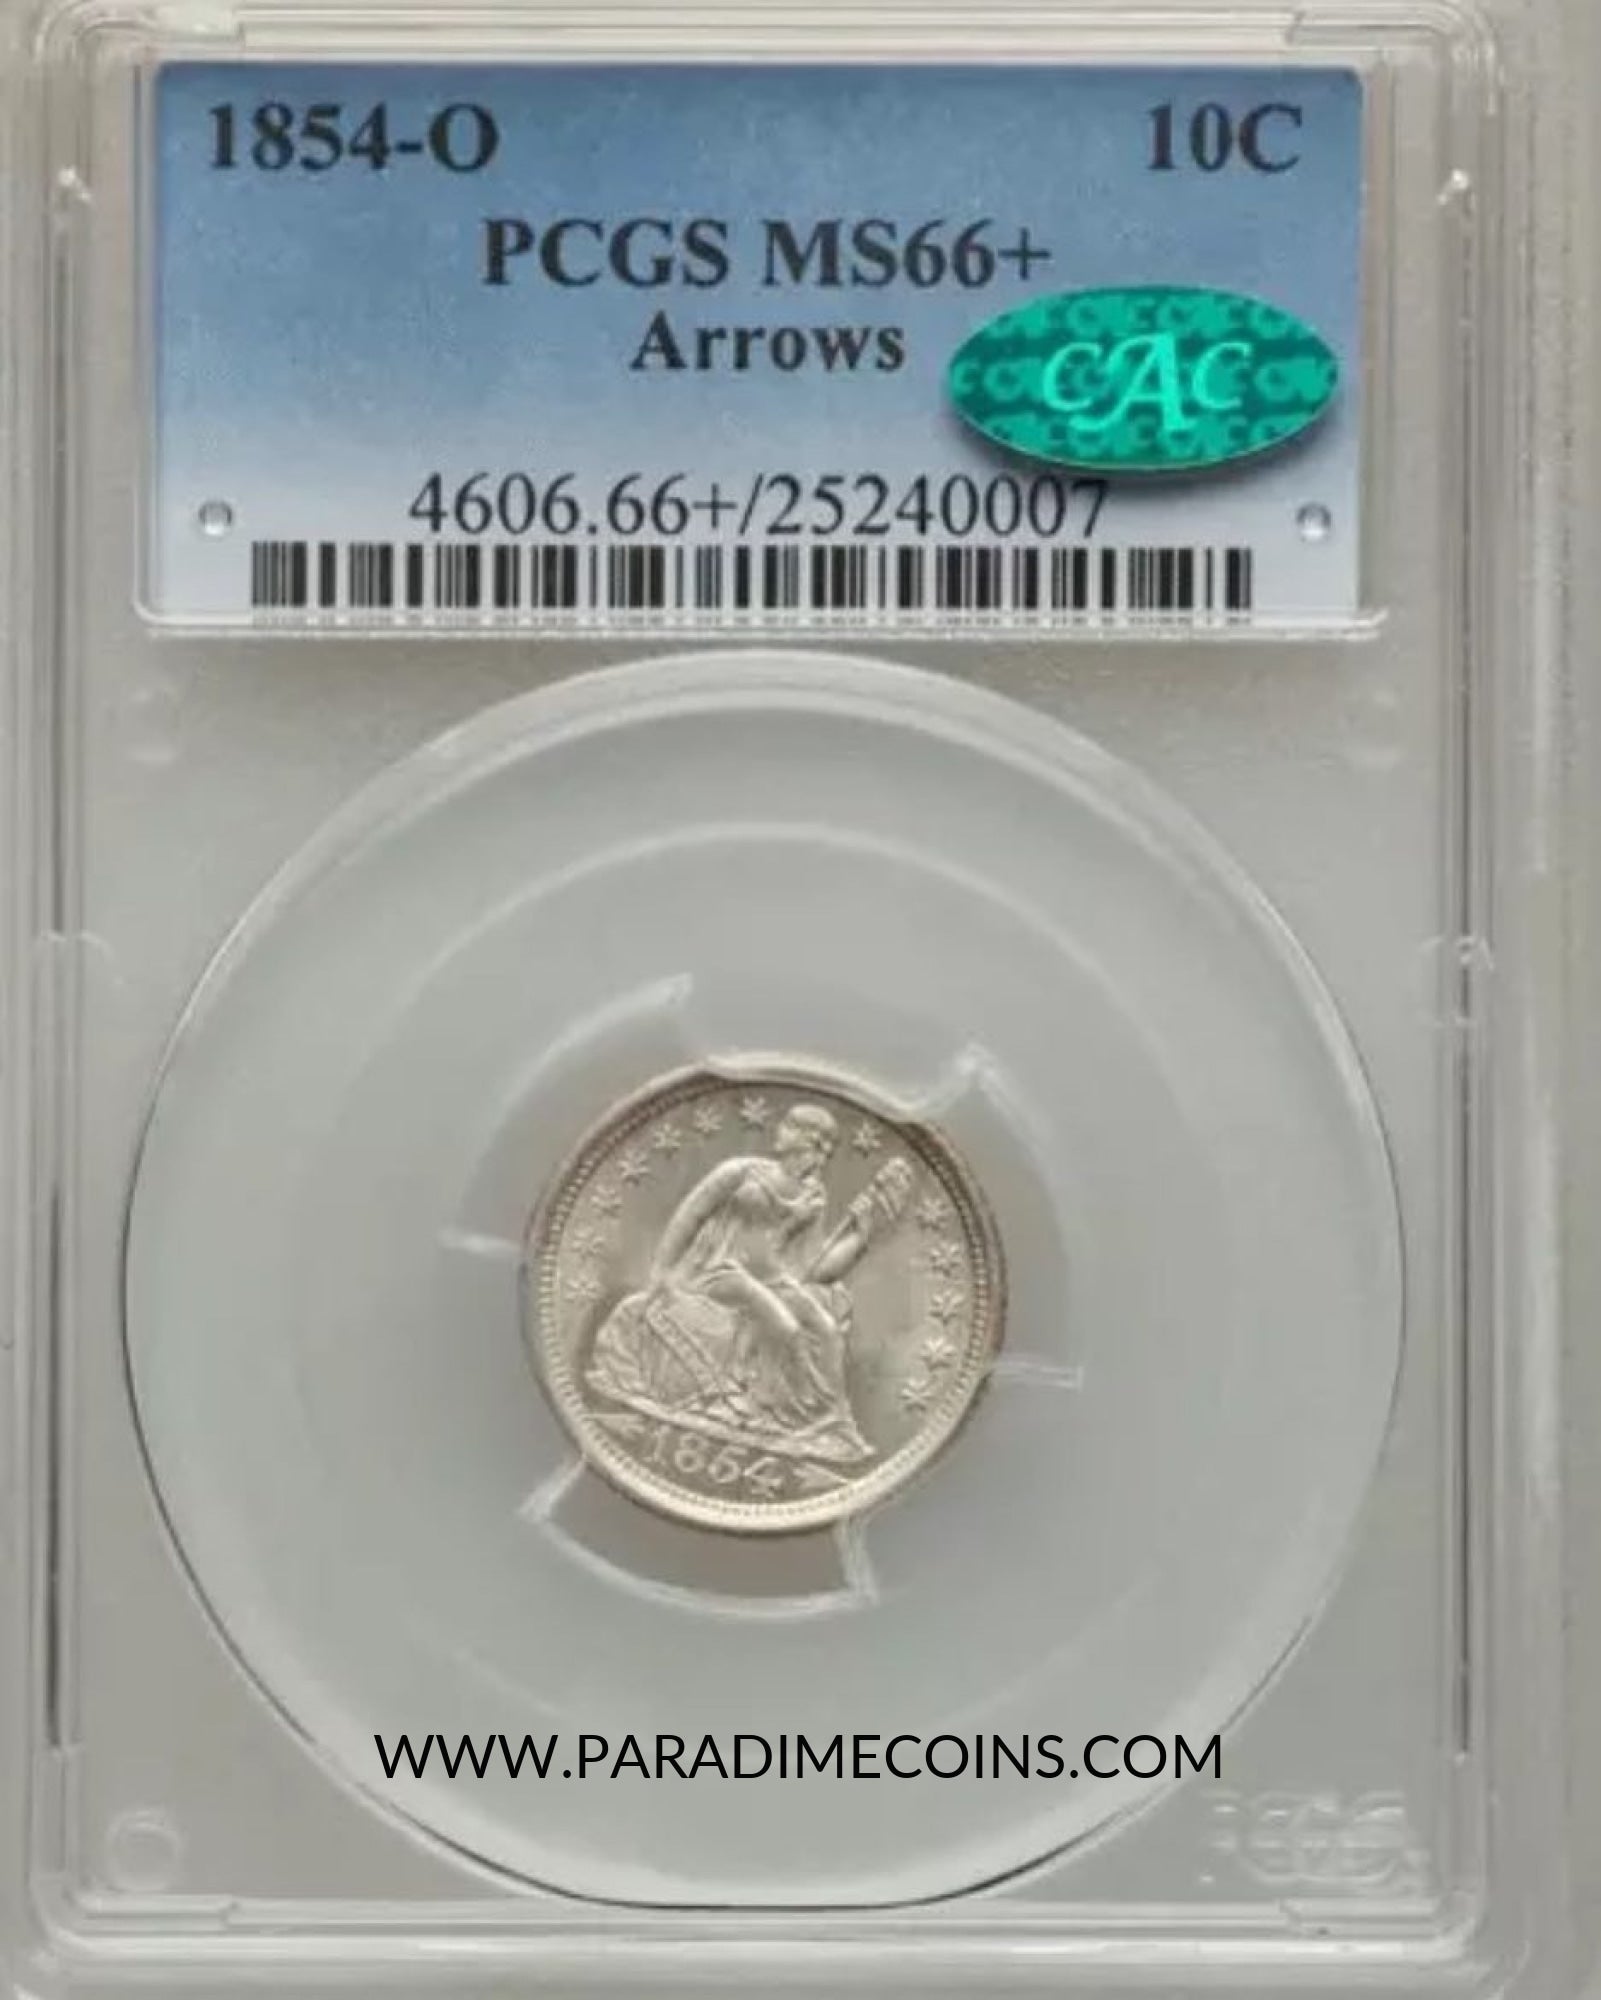 1854-O 10C MS66+ ARROWS PCGS CAC - Paradime Coins | PCGS NGC CACG CAC Rare US Numismatic Coins For Sale